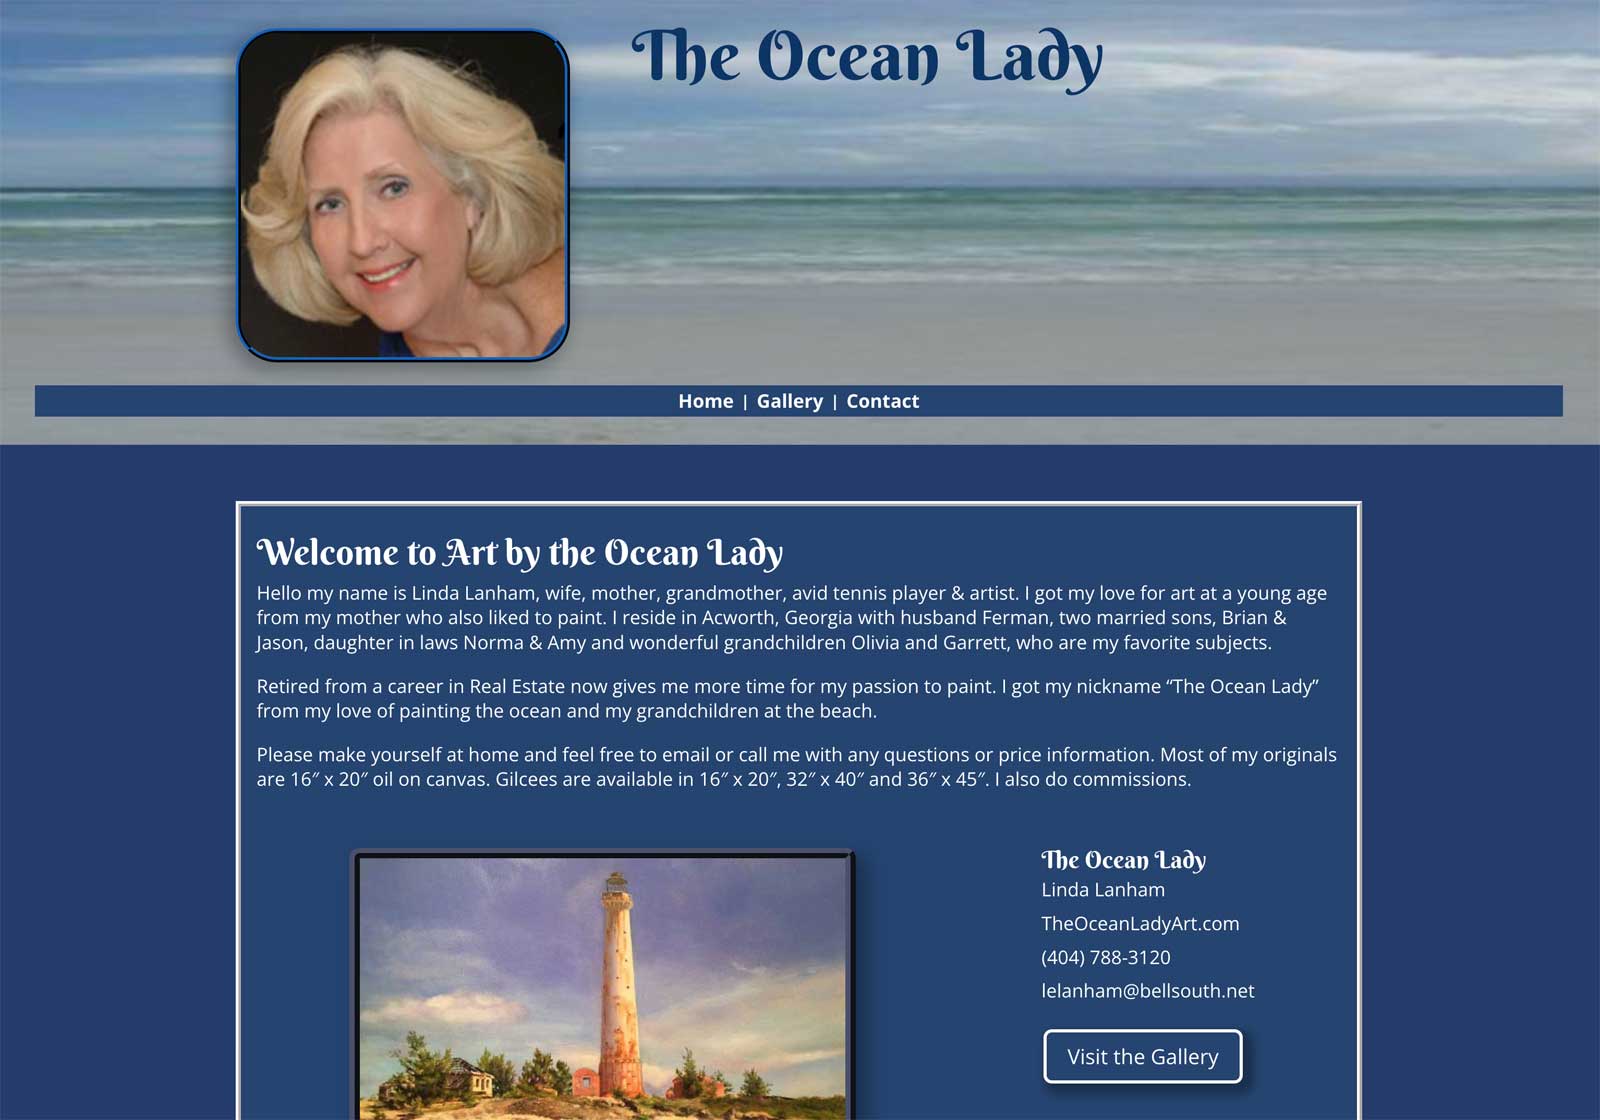 The Ocean Lady art